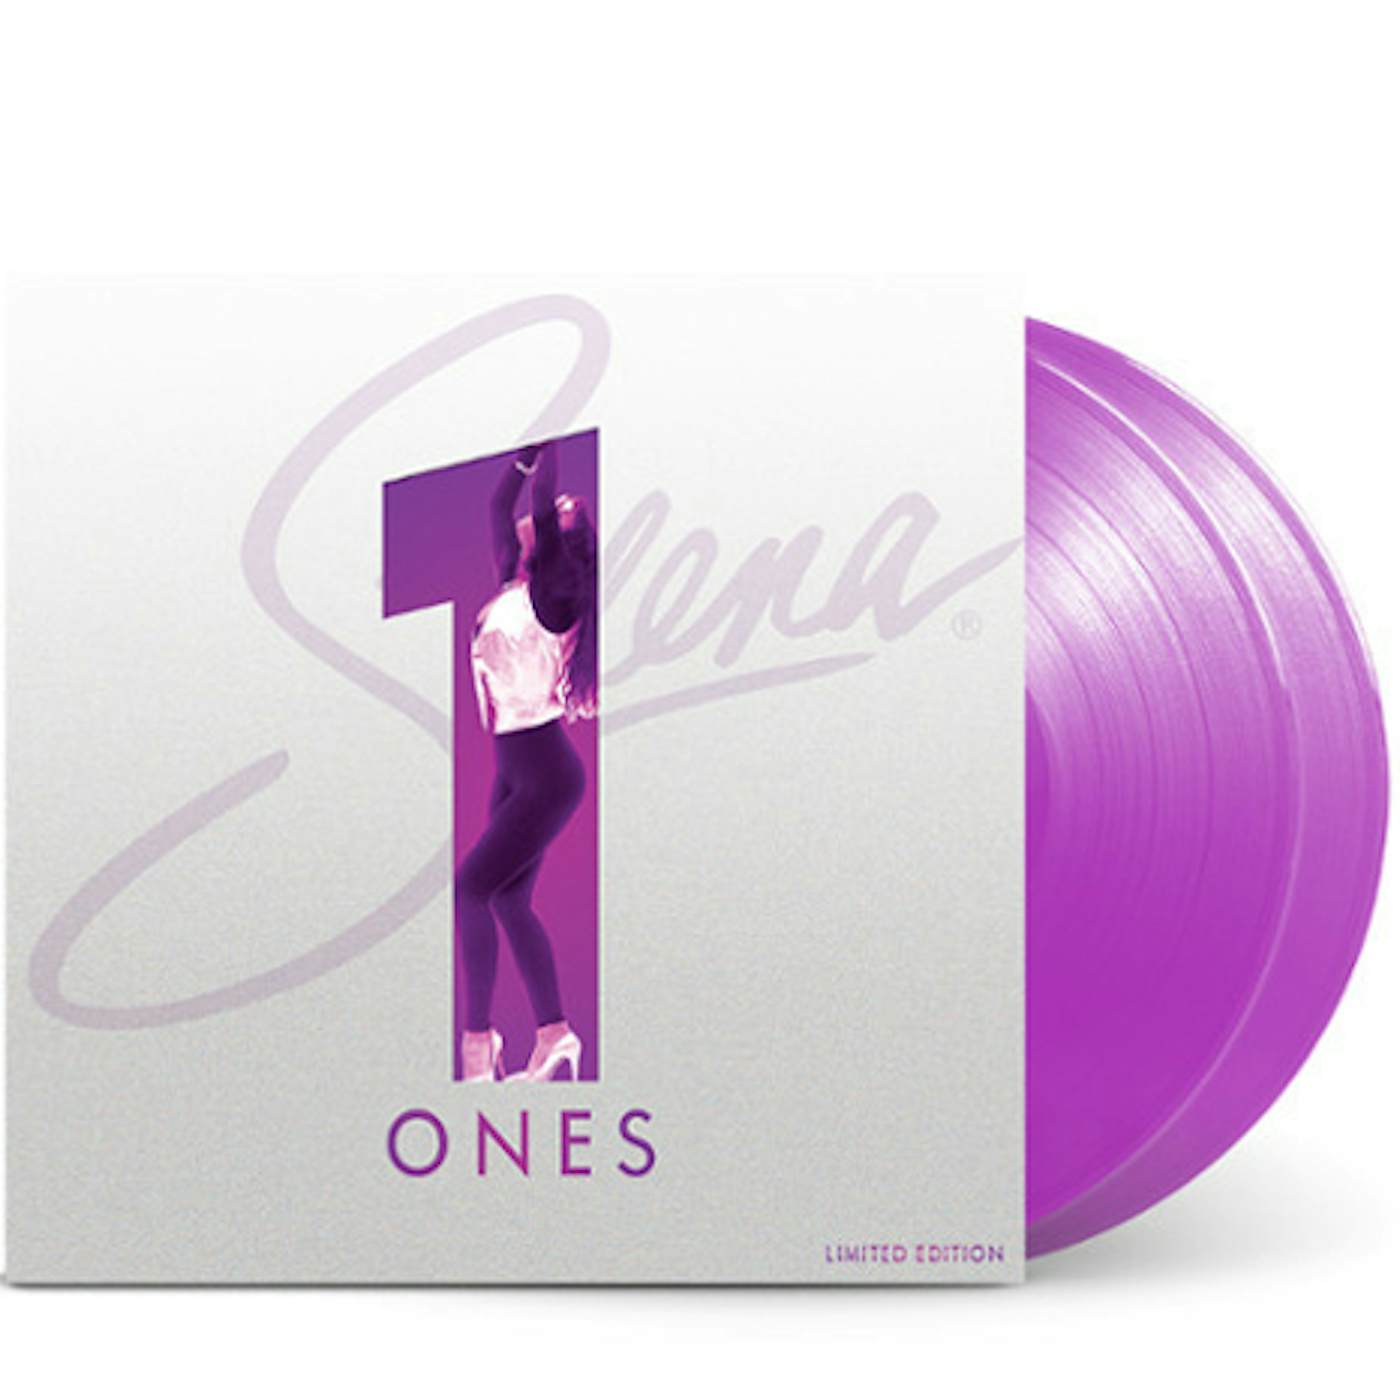 Selena ONES Vinyl Record - Limited Edition